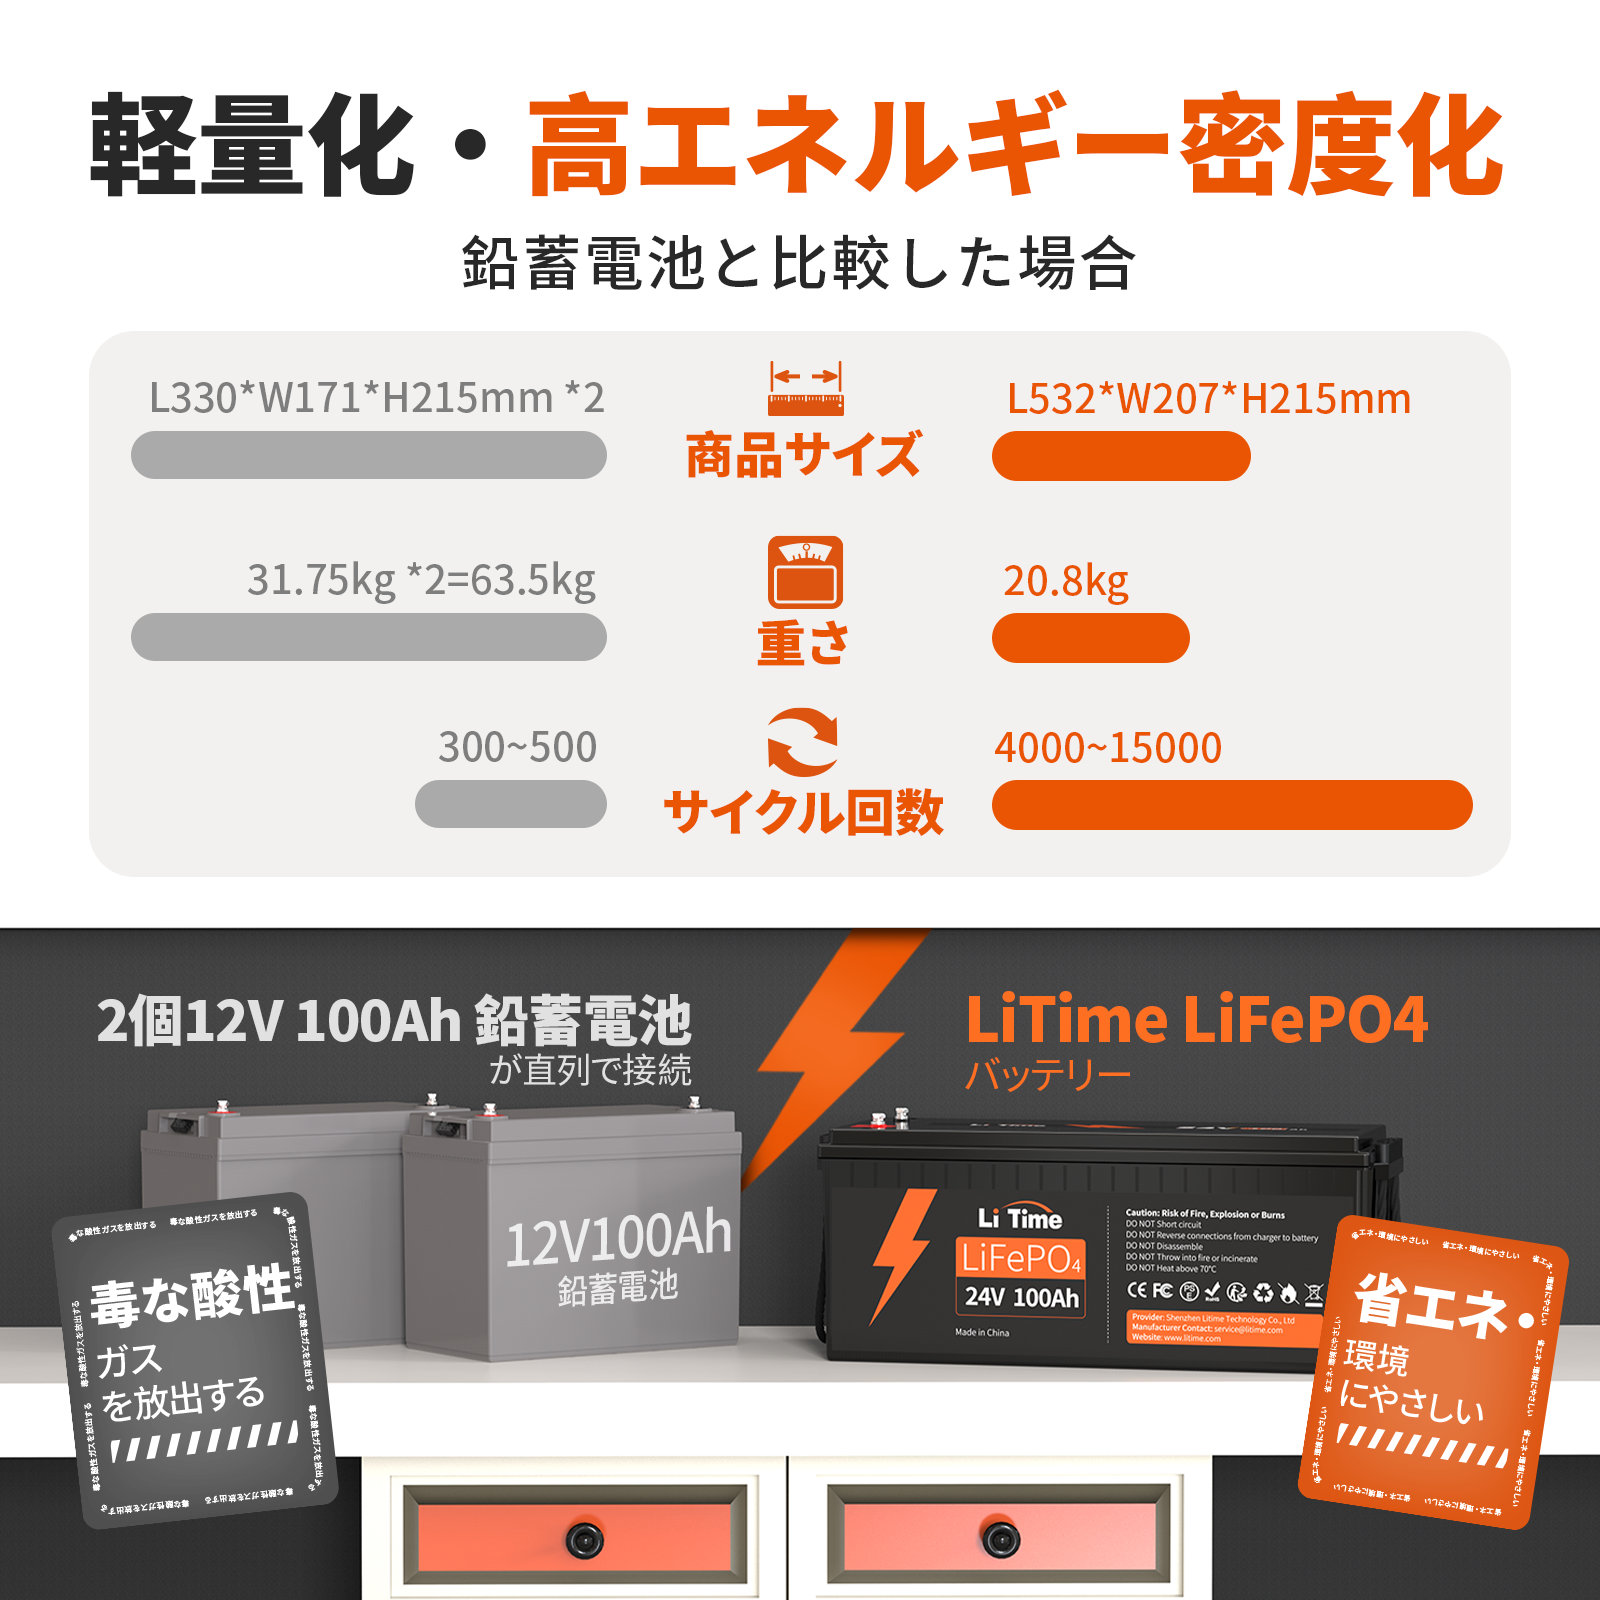 LiTime 24V 100Ah LiFePO4 リン酸鉄リチウムイオン 100ah バッテリー